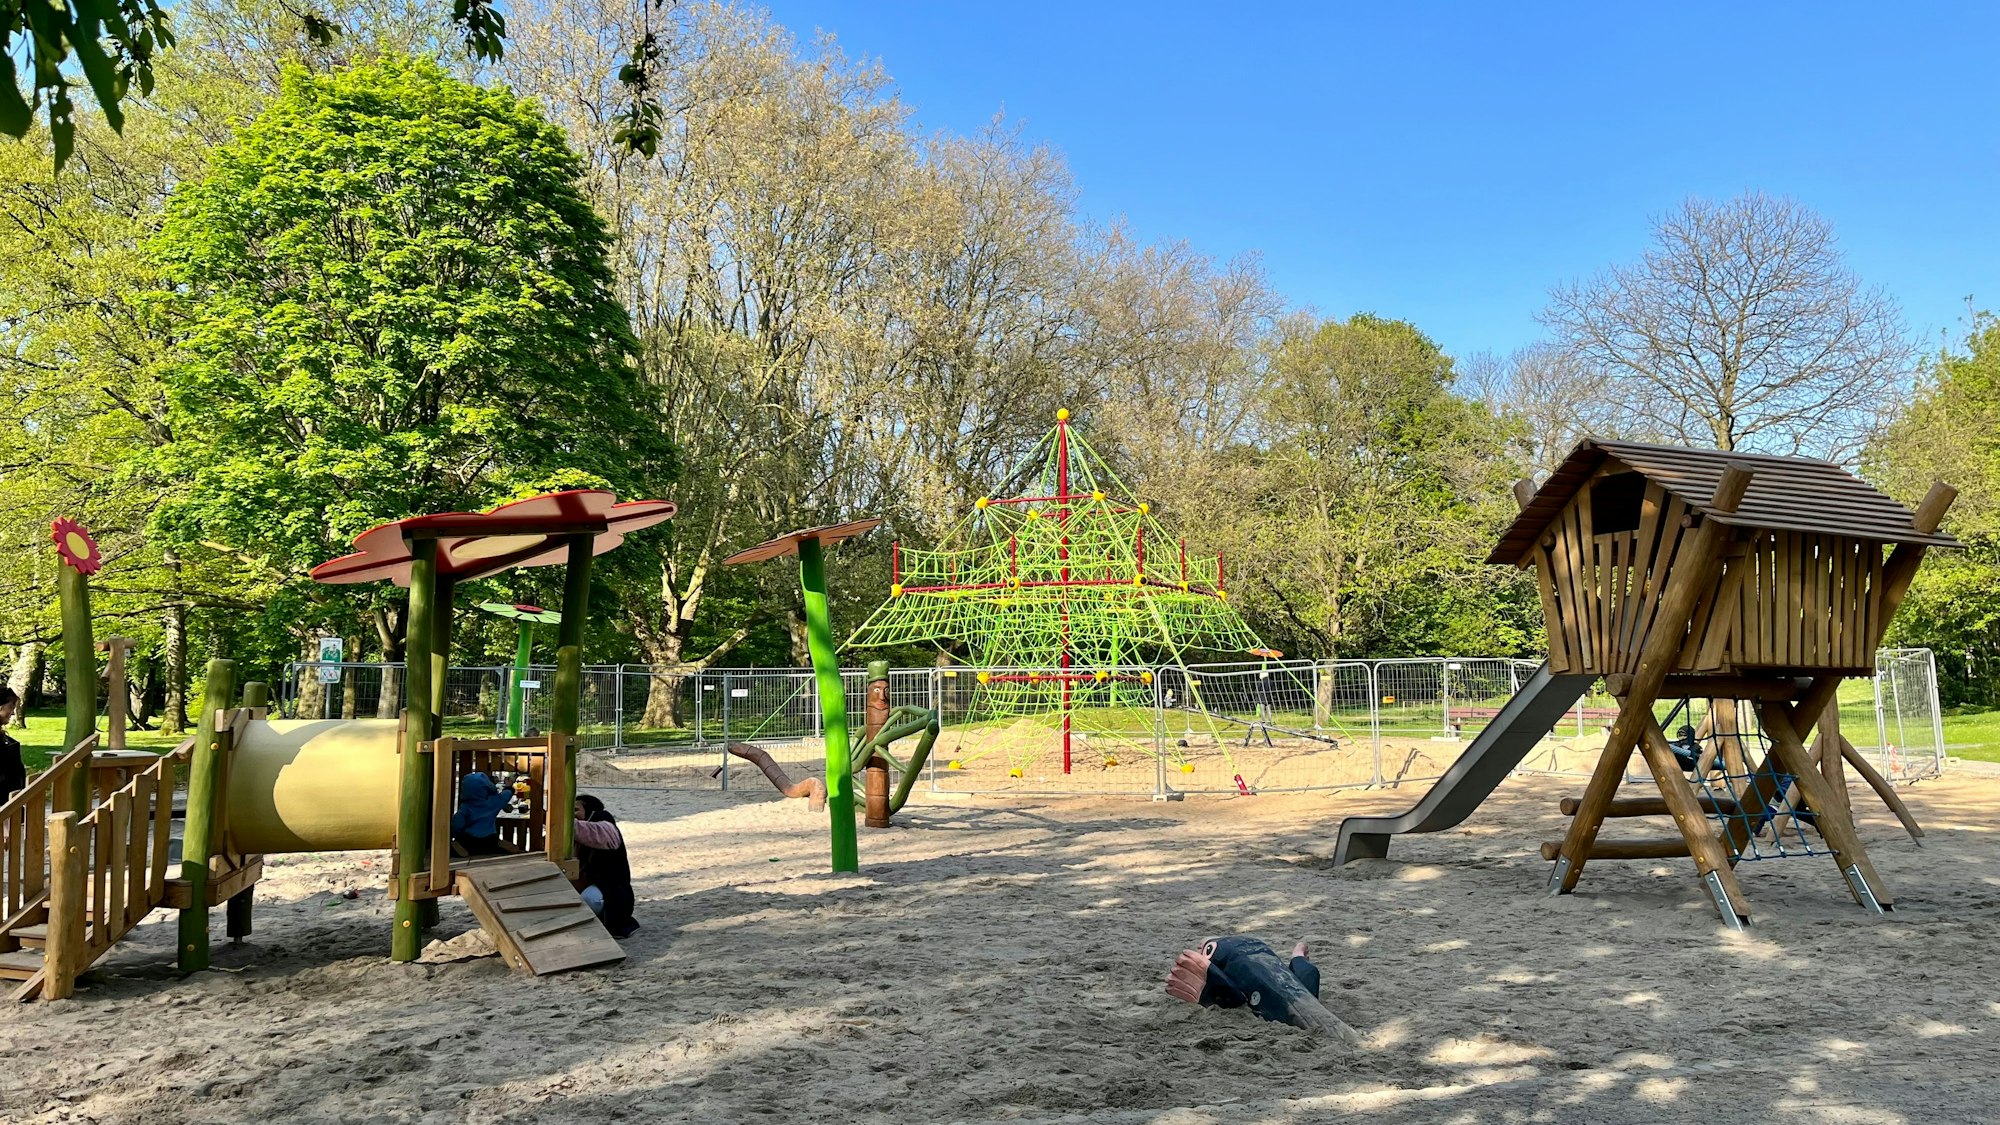 Das erneuerte, noch abgesperrte Seilspielgerät im Stadtpark Leverkusen